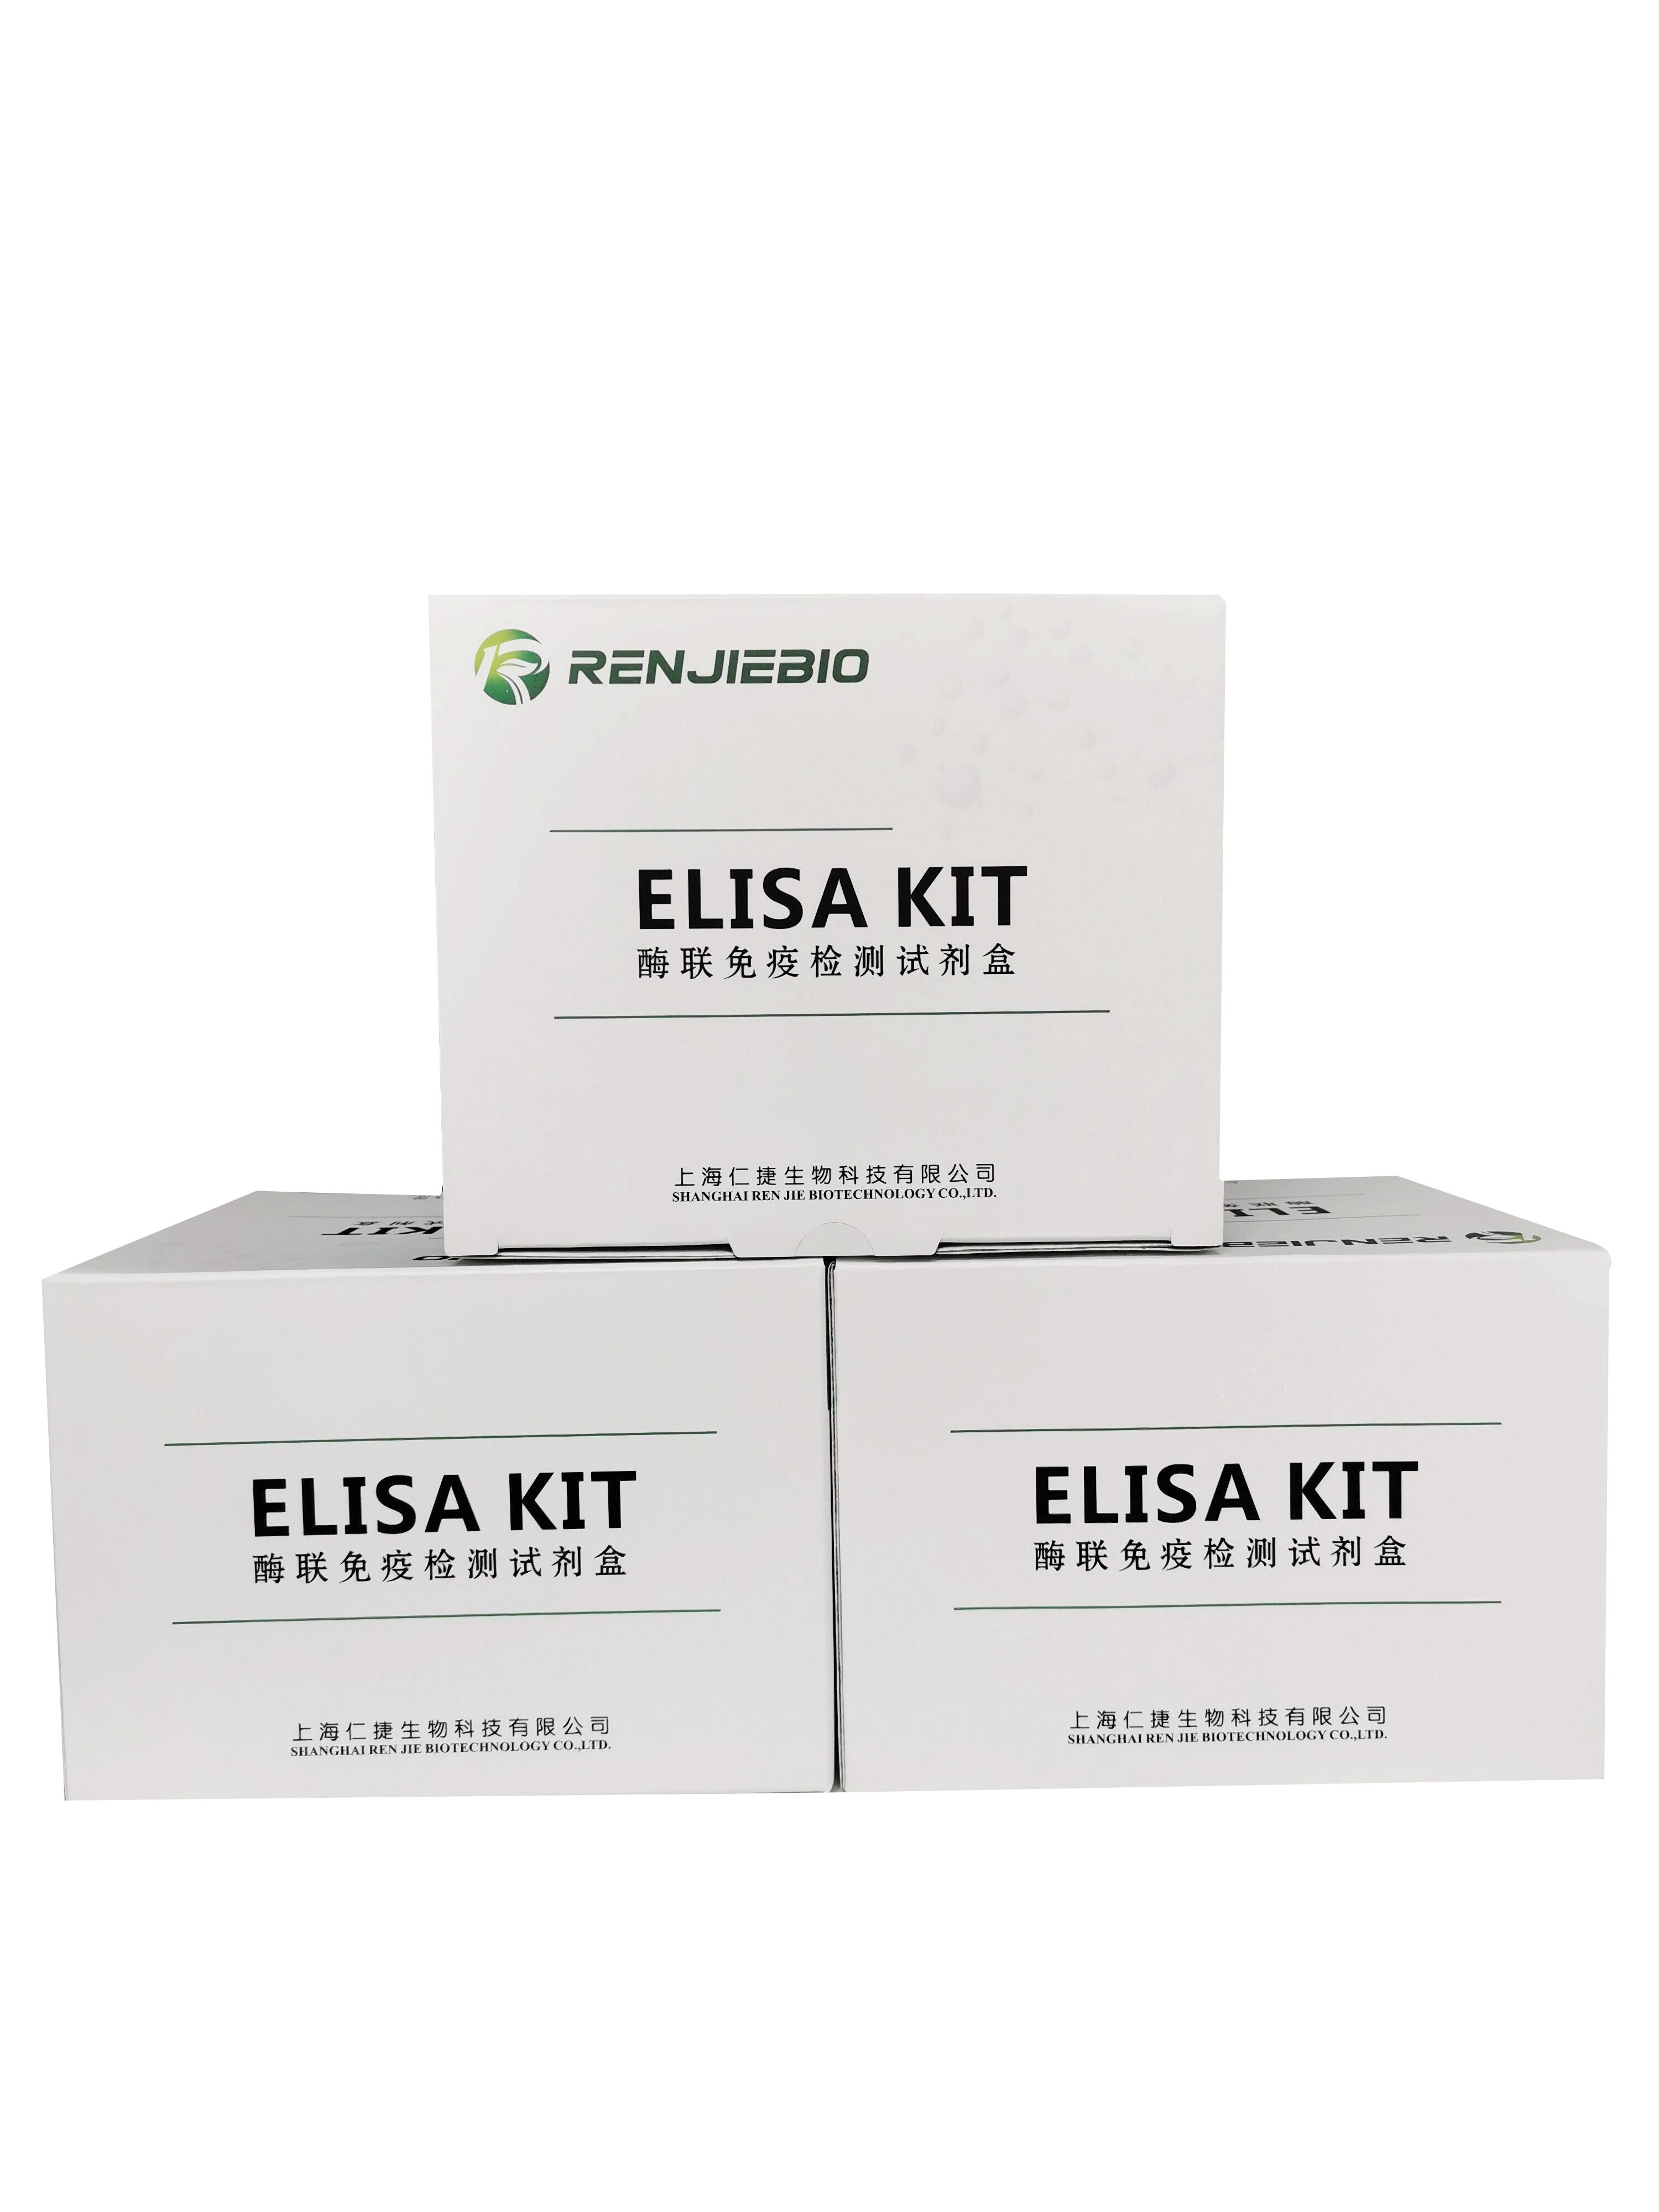 植物S-腺苷蛋氨酸（SAM）ELISA试剂盒